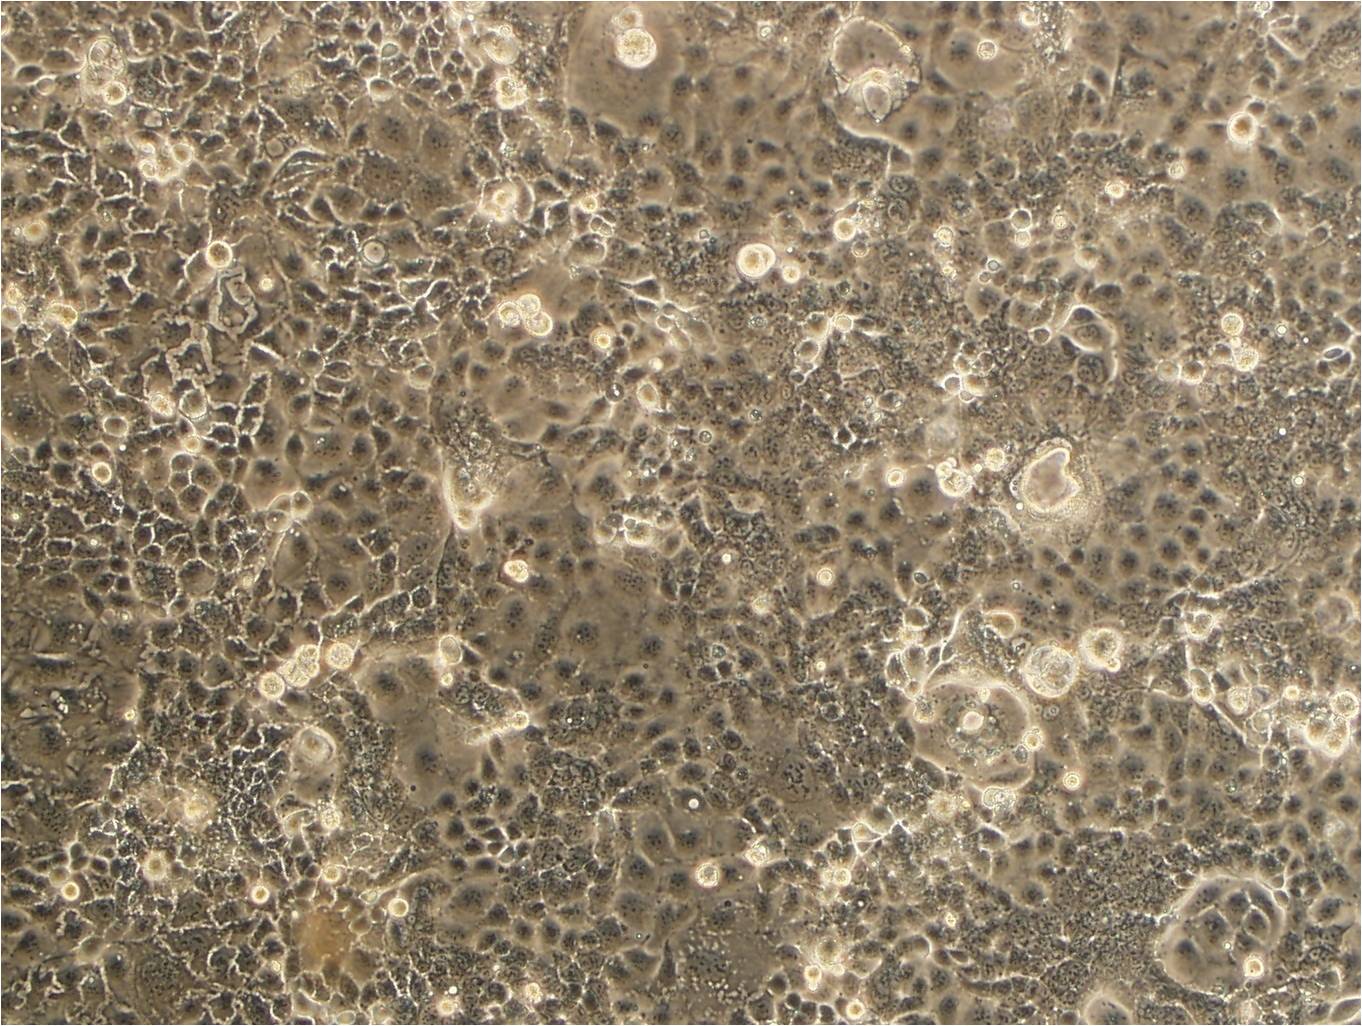 HCC1569 epithelioid cells人乳腺癌细胞系